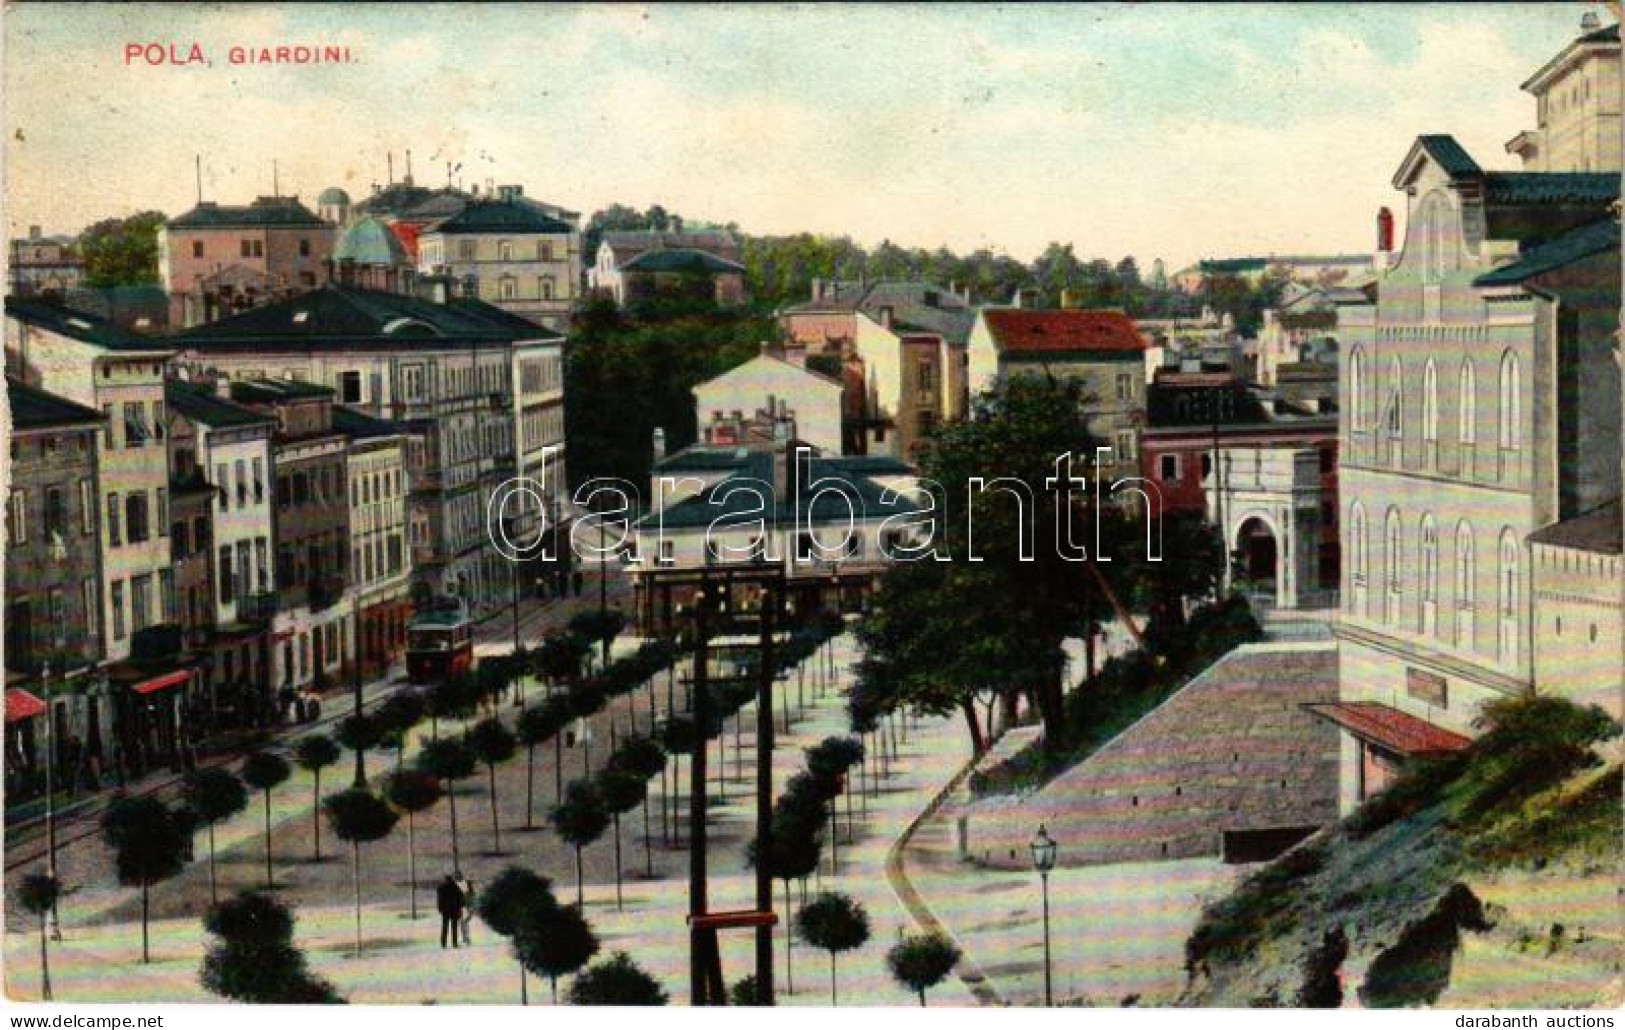 T2/T3 1909 Pola, Pula; Giardini / Square, Tram. G. Fano, POla, 1908/9. No. 7. (Rb) - Non Classés